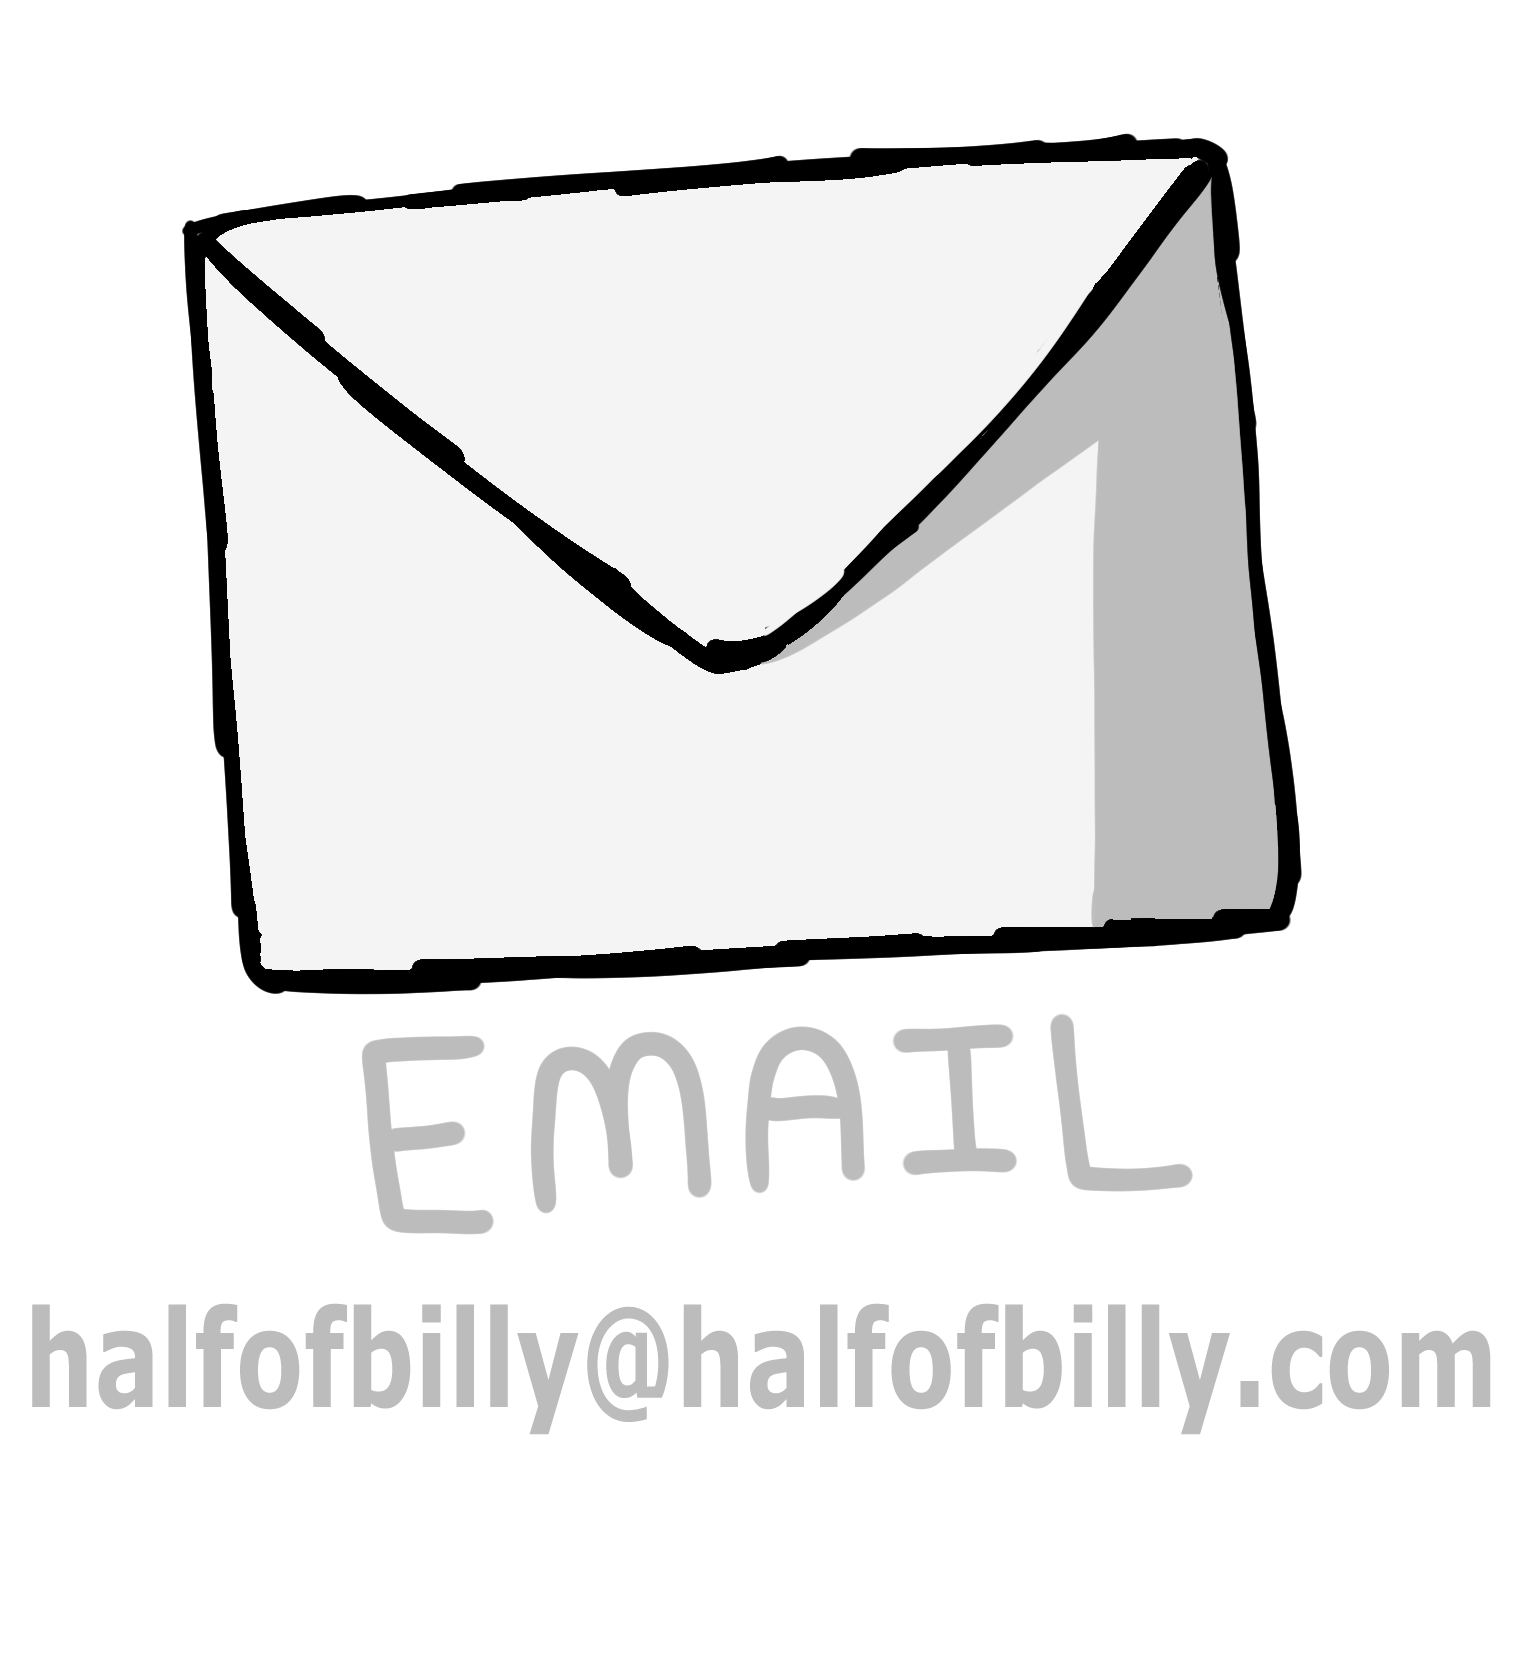 Email link: halfofbilly@halfofbilly.com